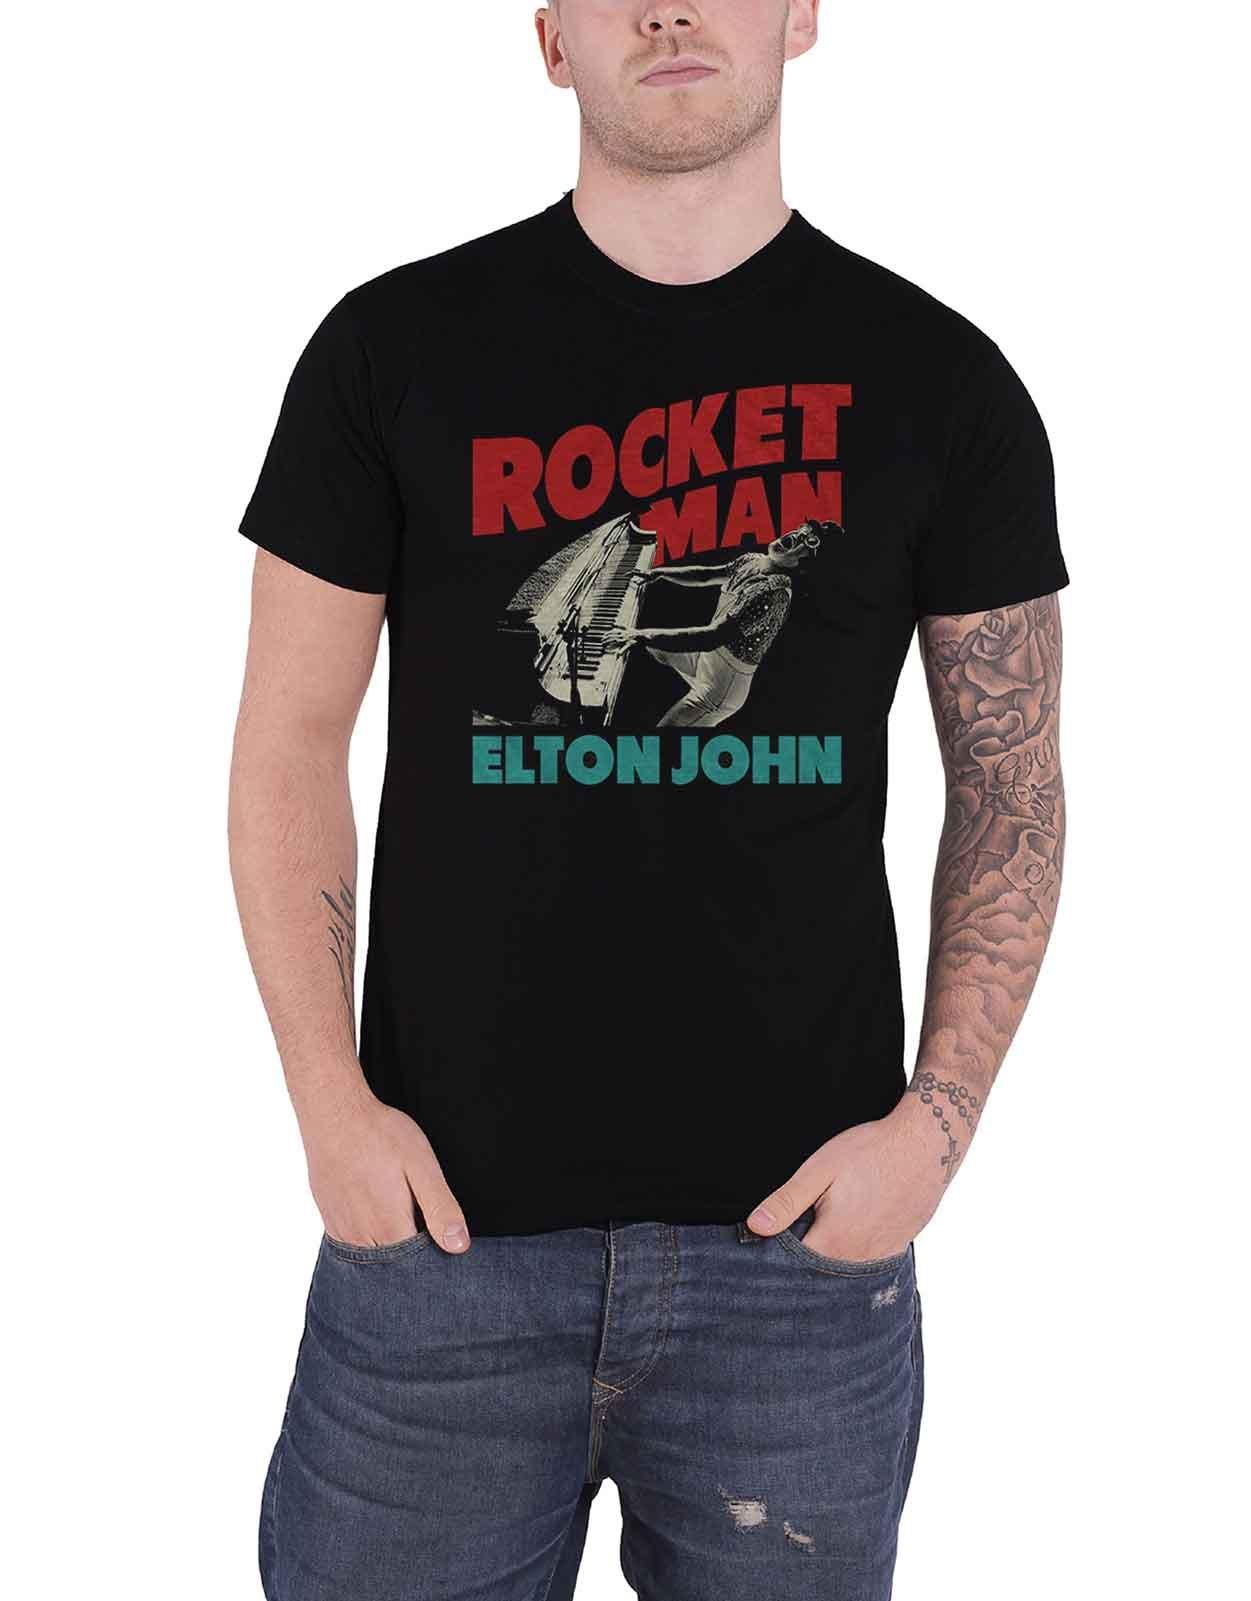 Футболка Rocketman Piano Elton John, черный футболка rocketman circle point elton john темно синий